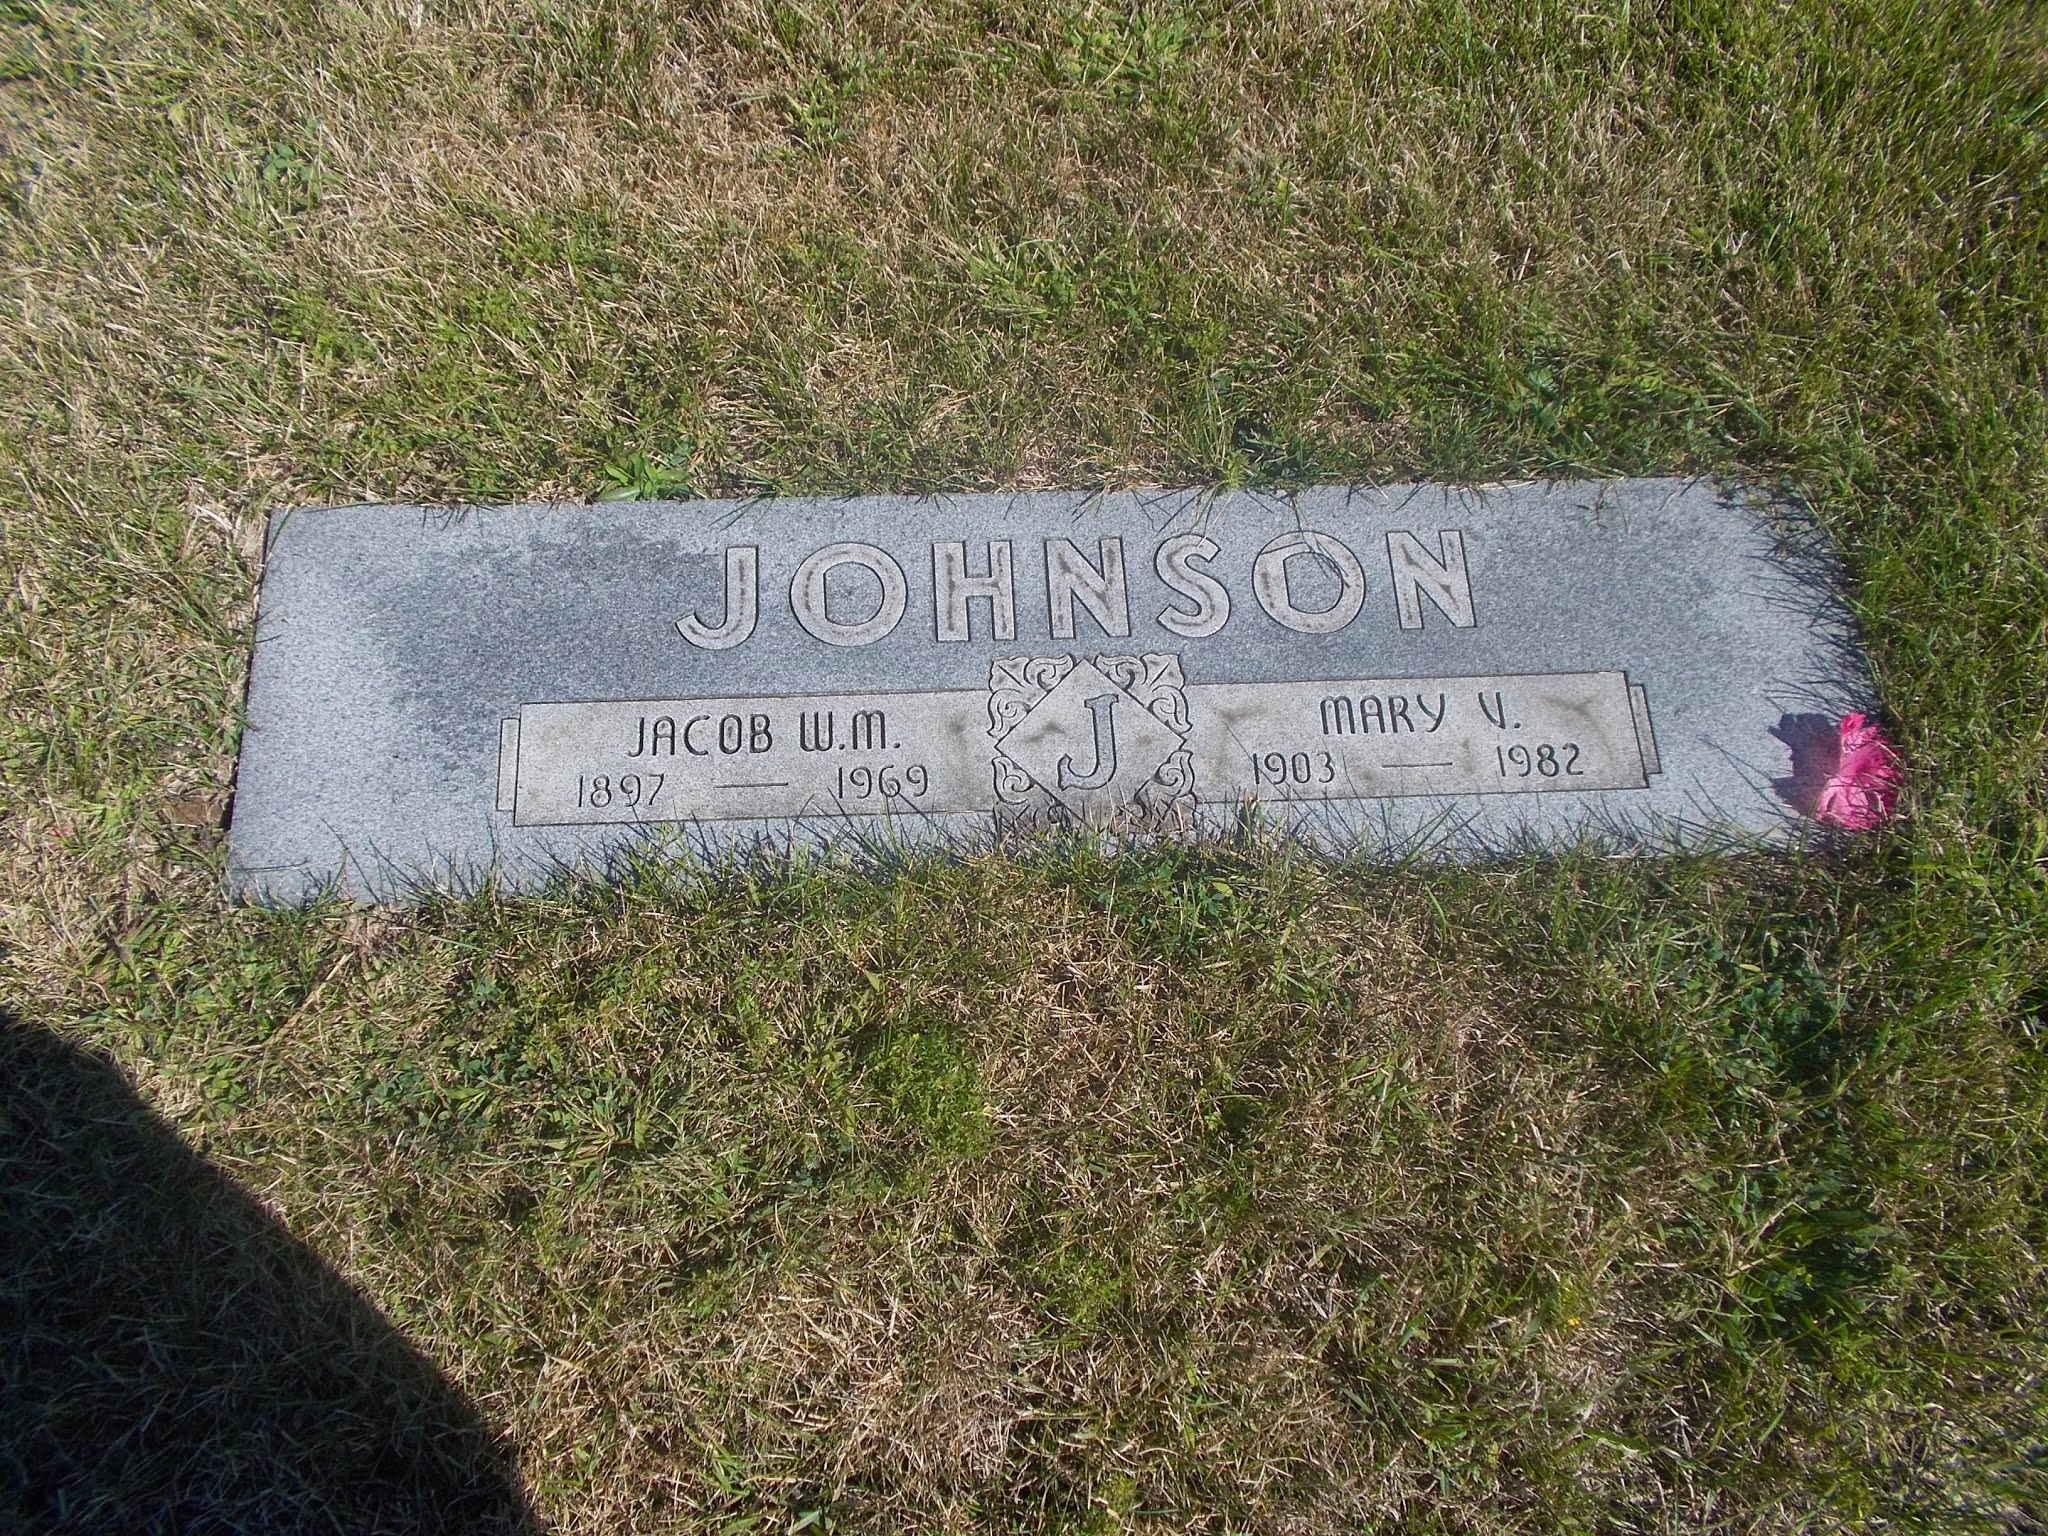 Jacob W M Johnson